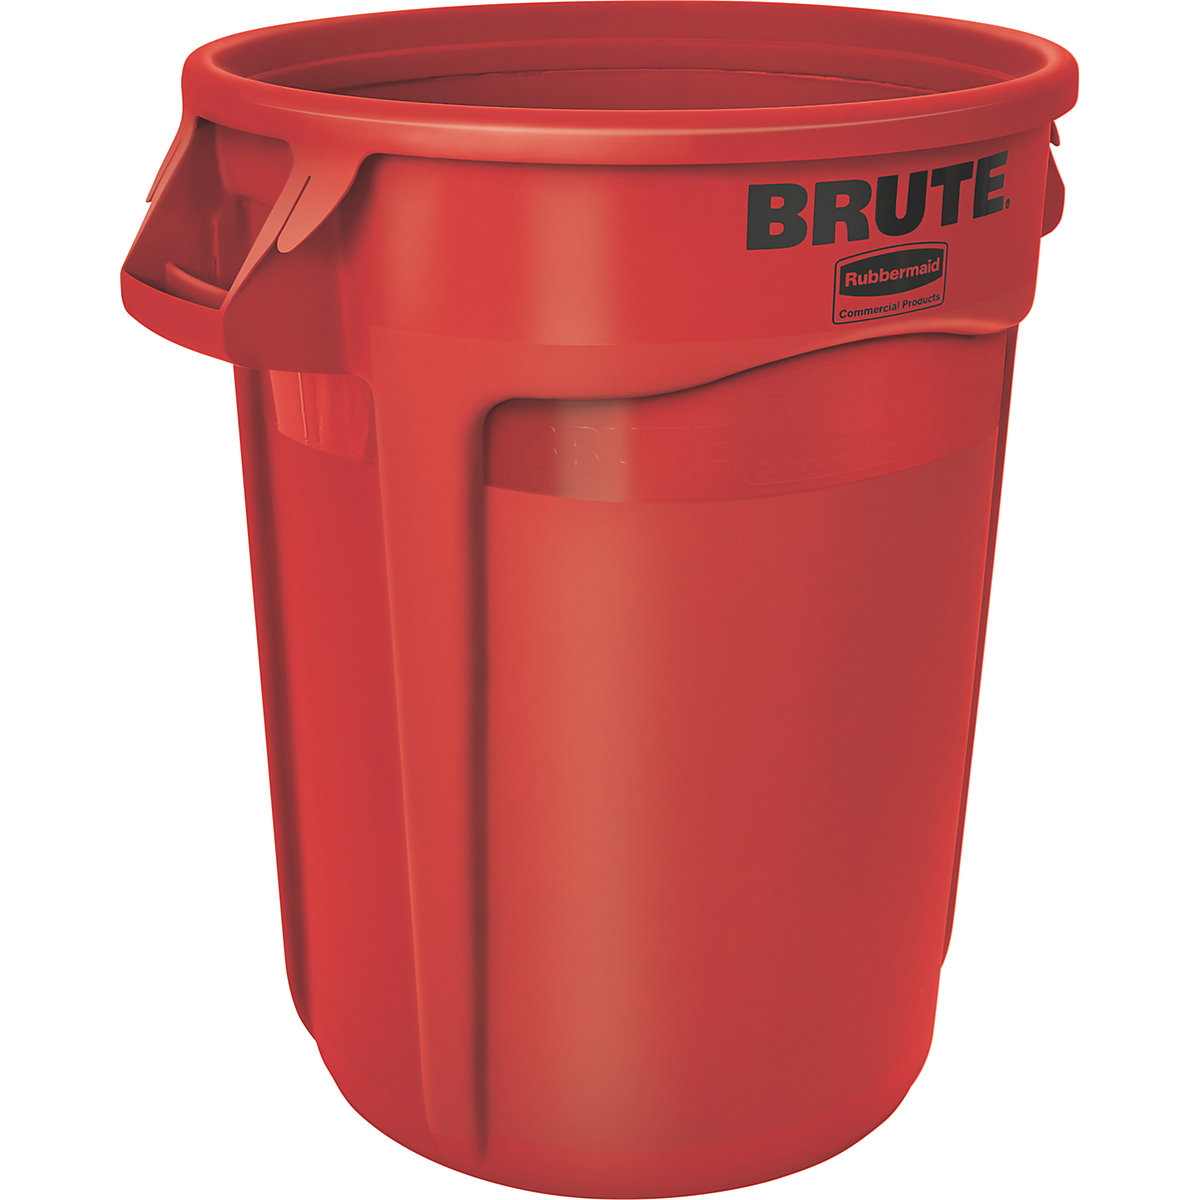 Univerzalni kontejner BRUTE®, okrugli – Rubbermaid, sadržaj 121 l, u crvenoj boji-13